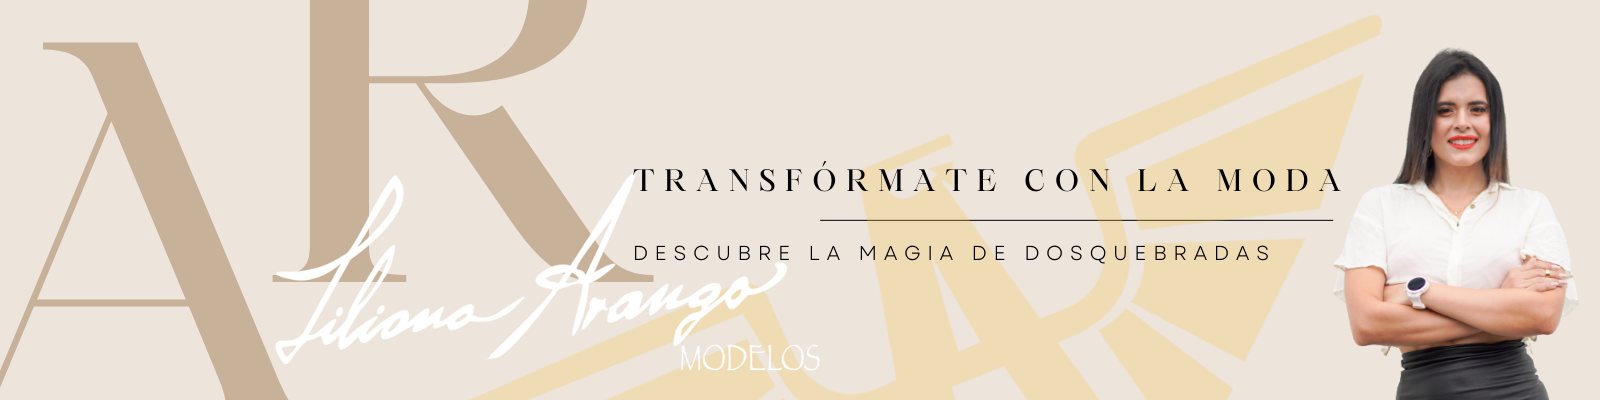 talleres de modelaje gratis Andrea Romero y Liliana Arango modelos